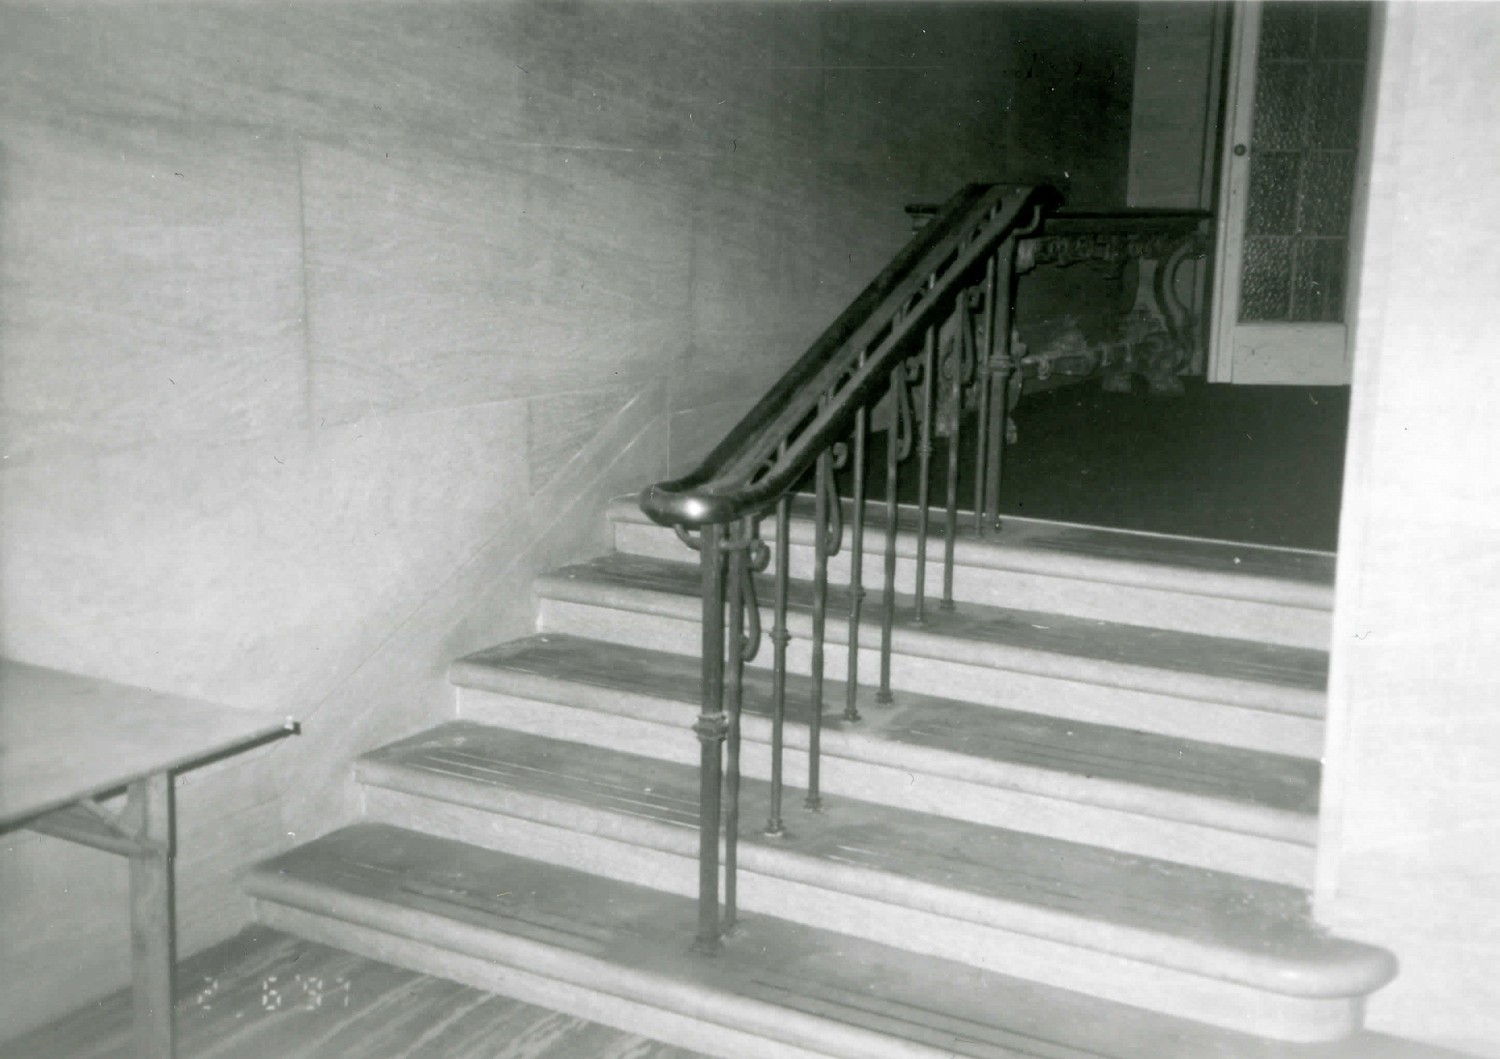 Commodore Perry Hotel, Toledo Ohio Main Staircase - ground floor (1997)